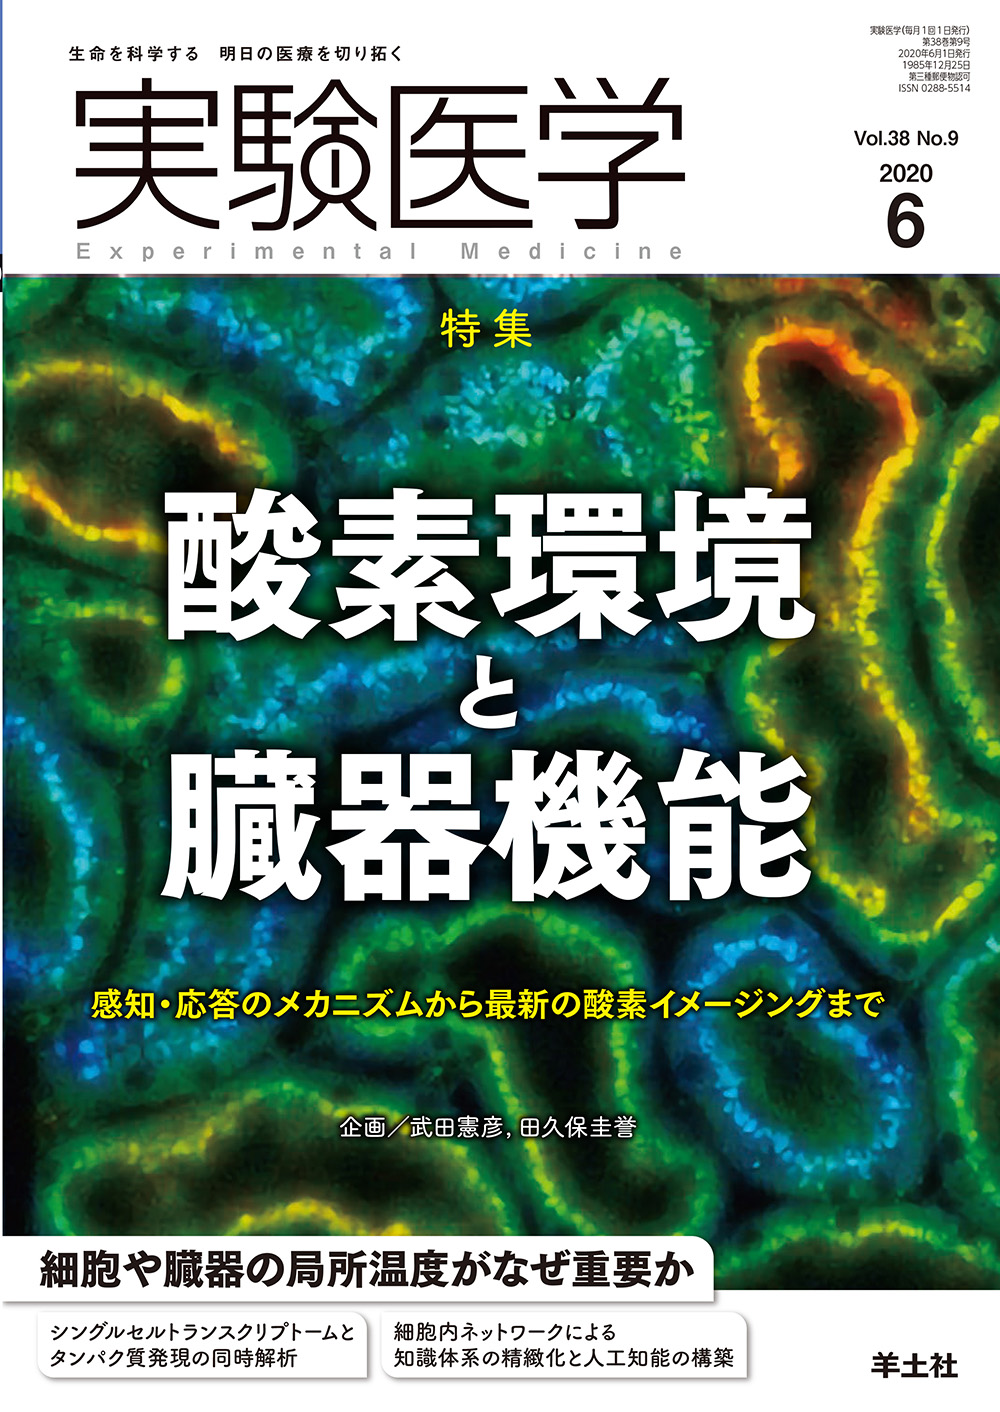 実験医学 Vol 38 No 9 電子版 医書 Jp